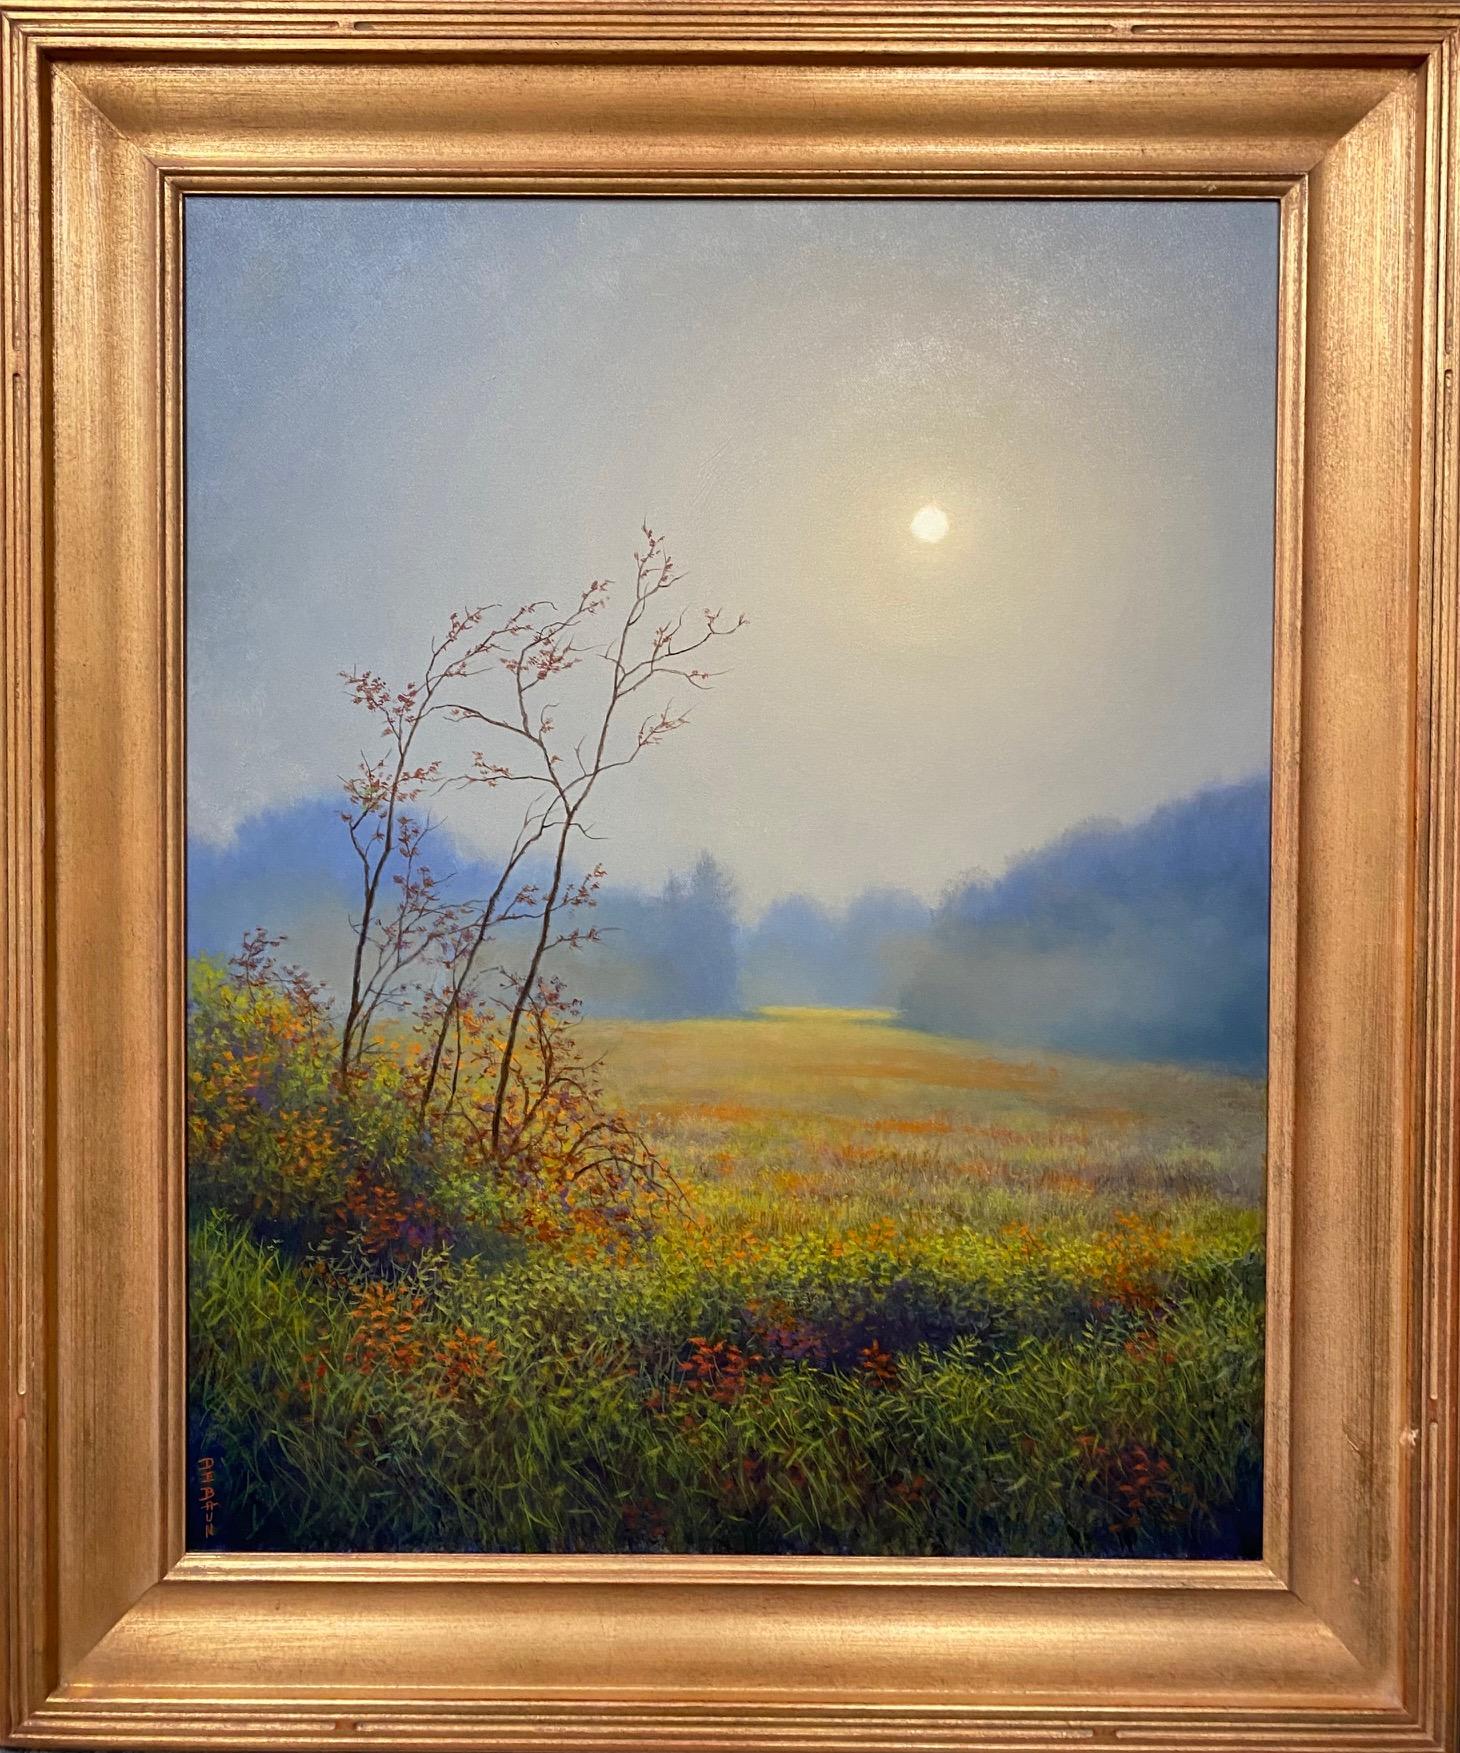 Barry DeBaun Landscape Painting - October Sun, original 30x24 realist landscape